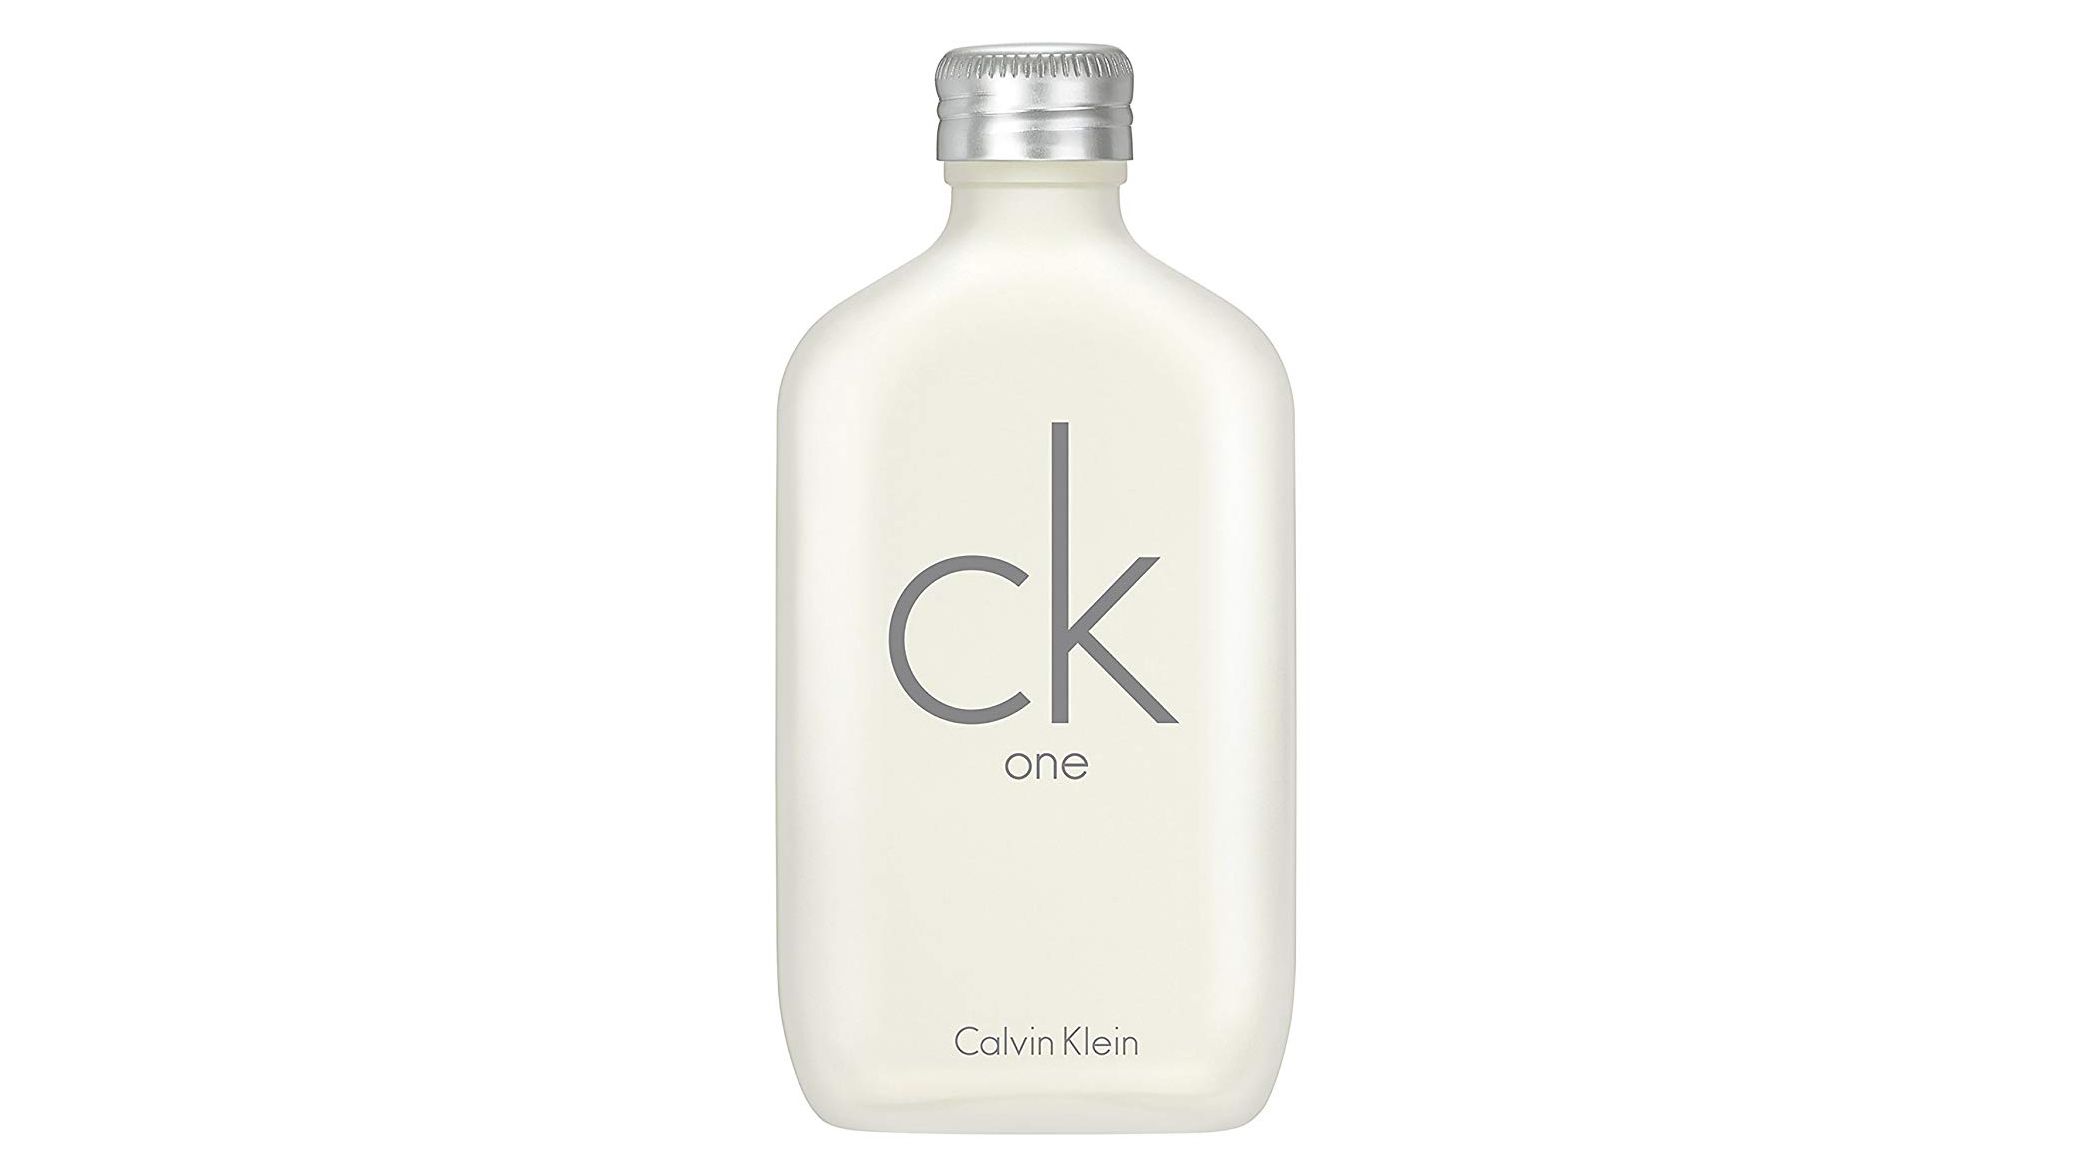 a Legjobb férfi illatok: Calvin Klein CK One Eau de Toilette